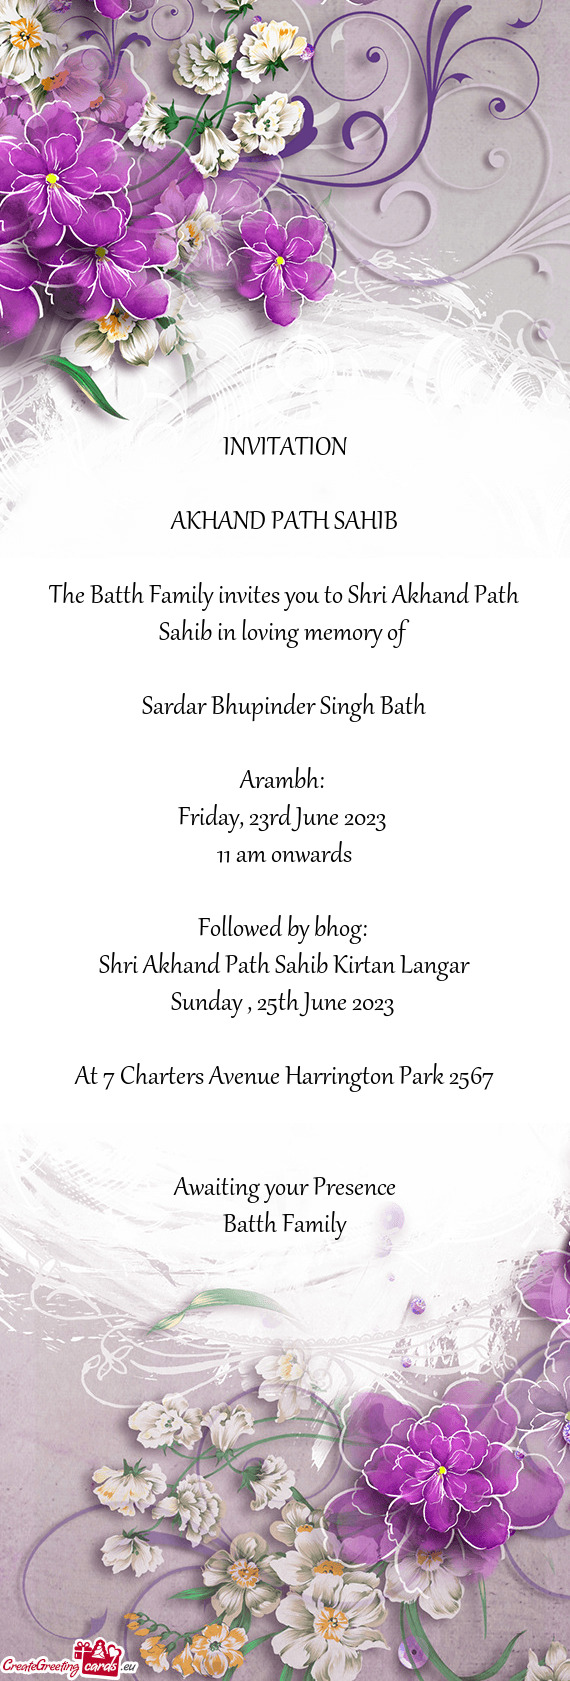 The Batth Family invites you to Shri Akhand Path Sahib in loving memory of